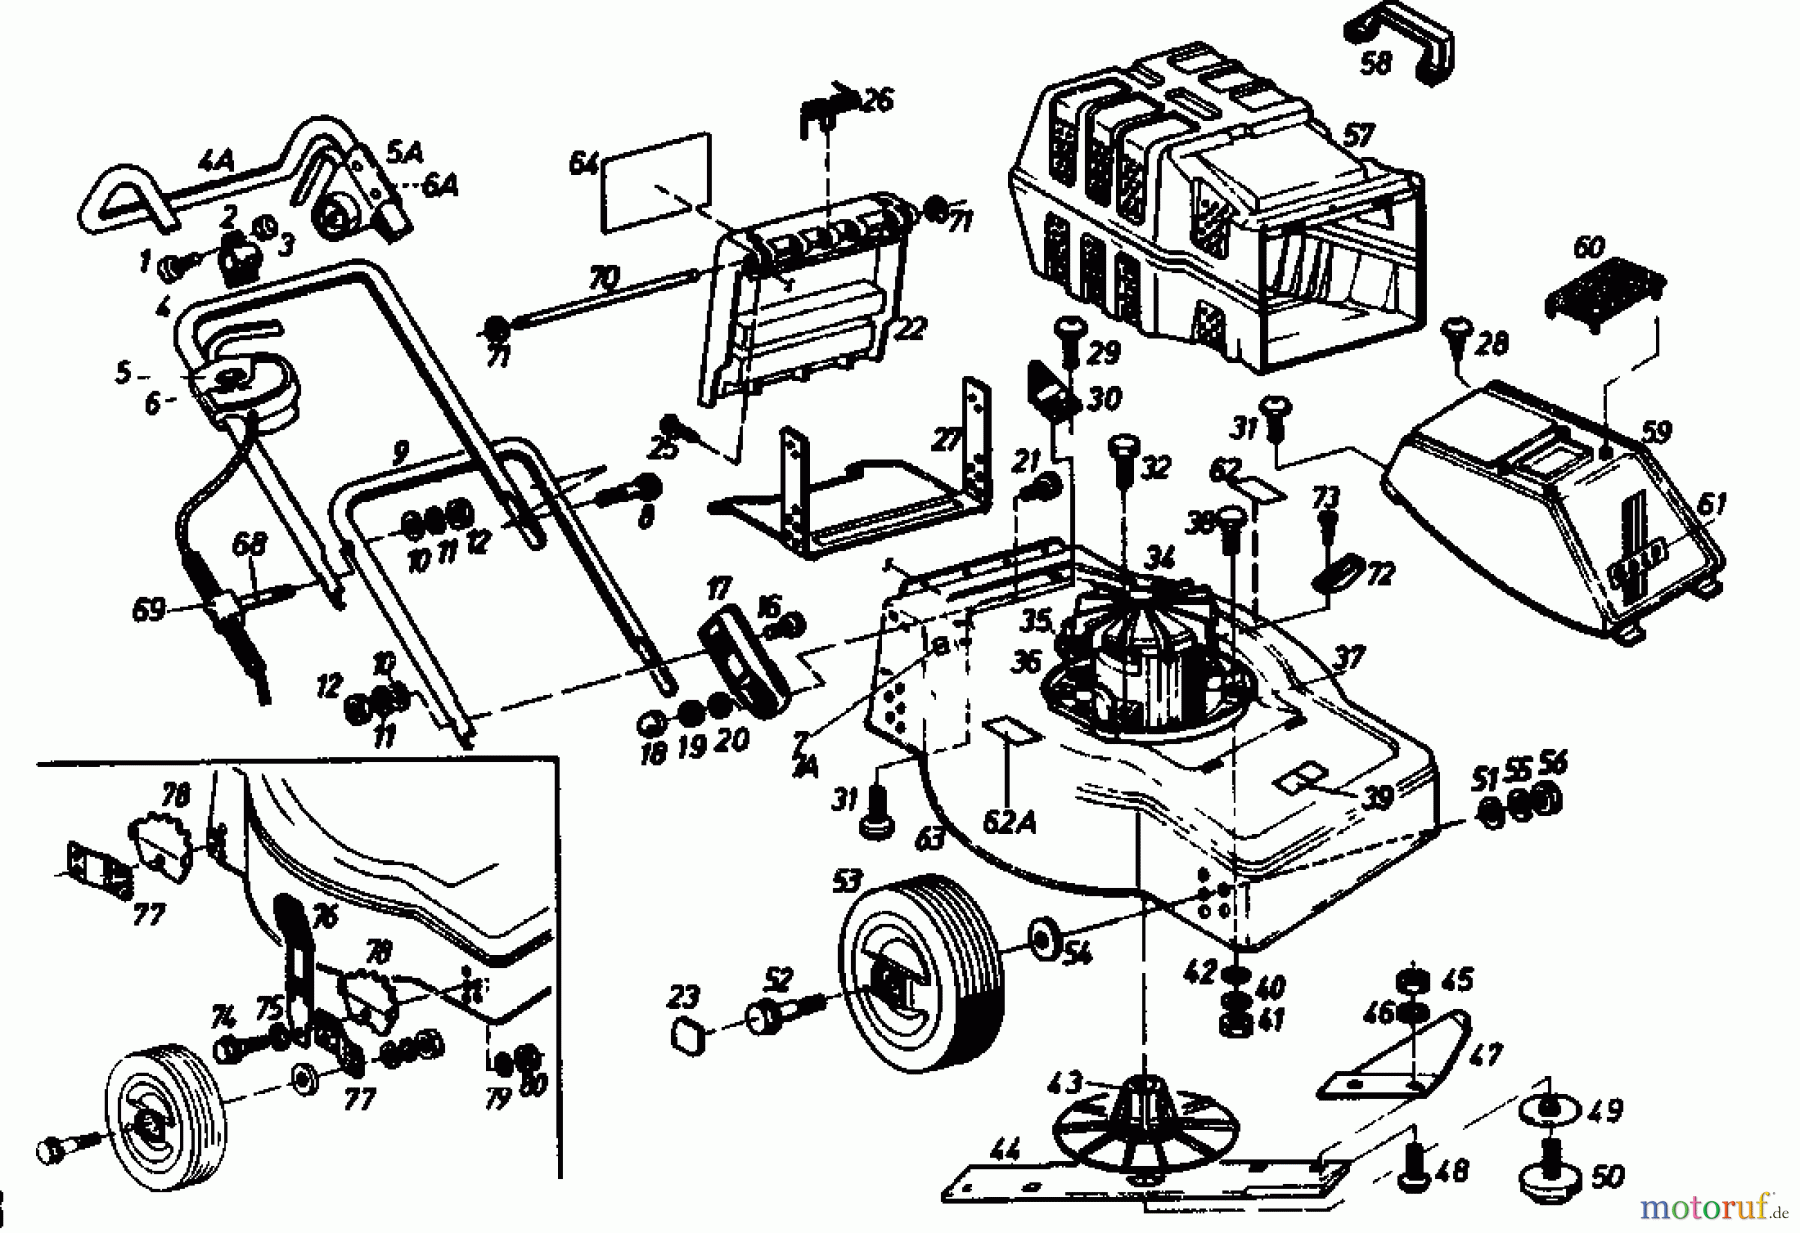  Golf Electric mower HEL 02881.05  (1988) Basic machine